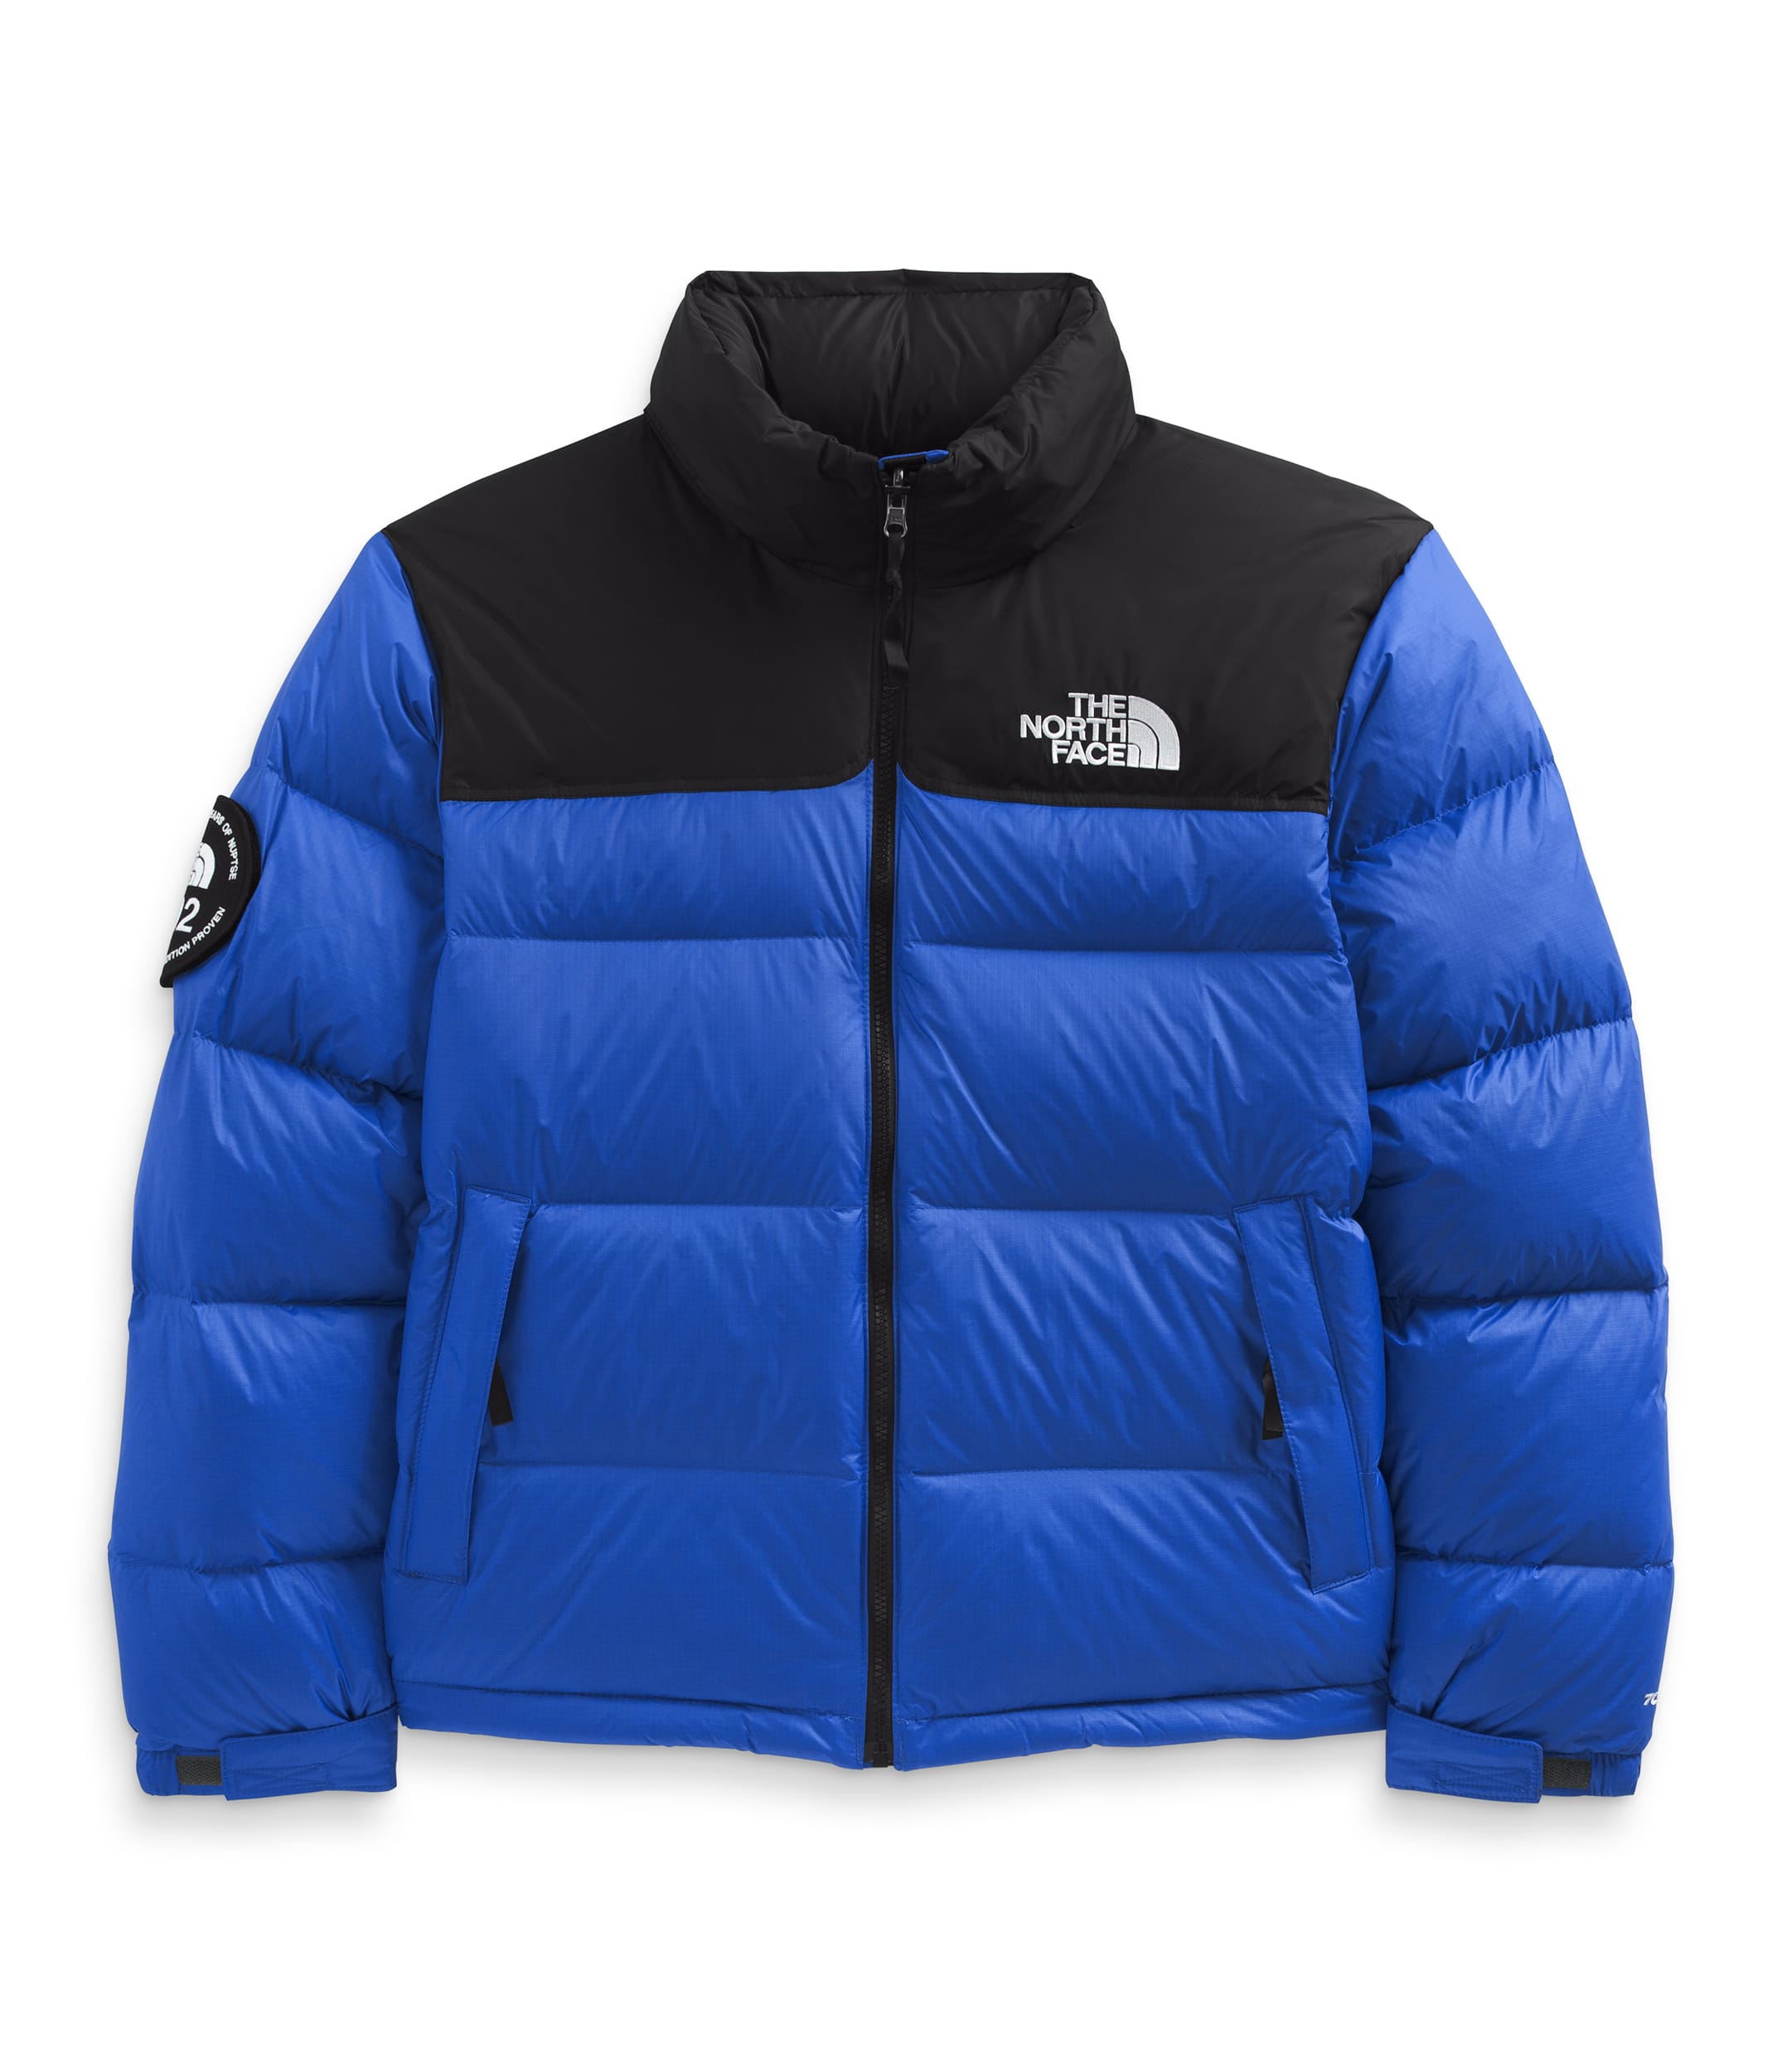 Nuptse jacket North Face in Blue